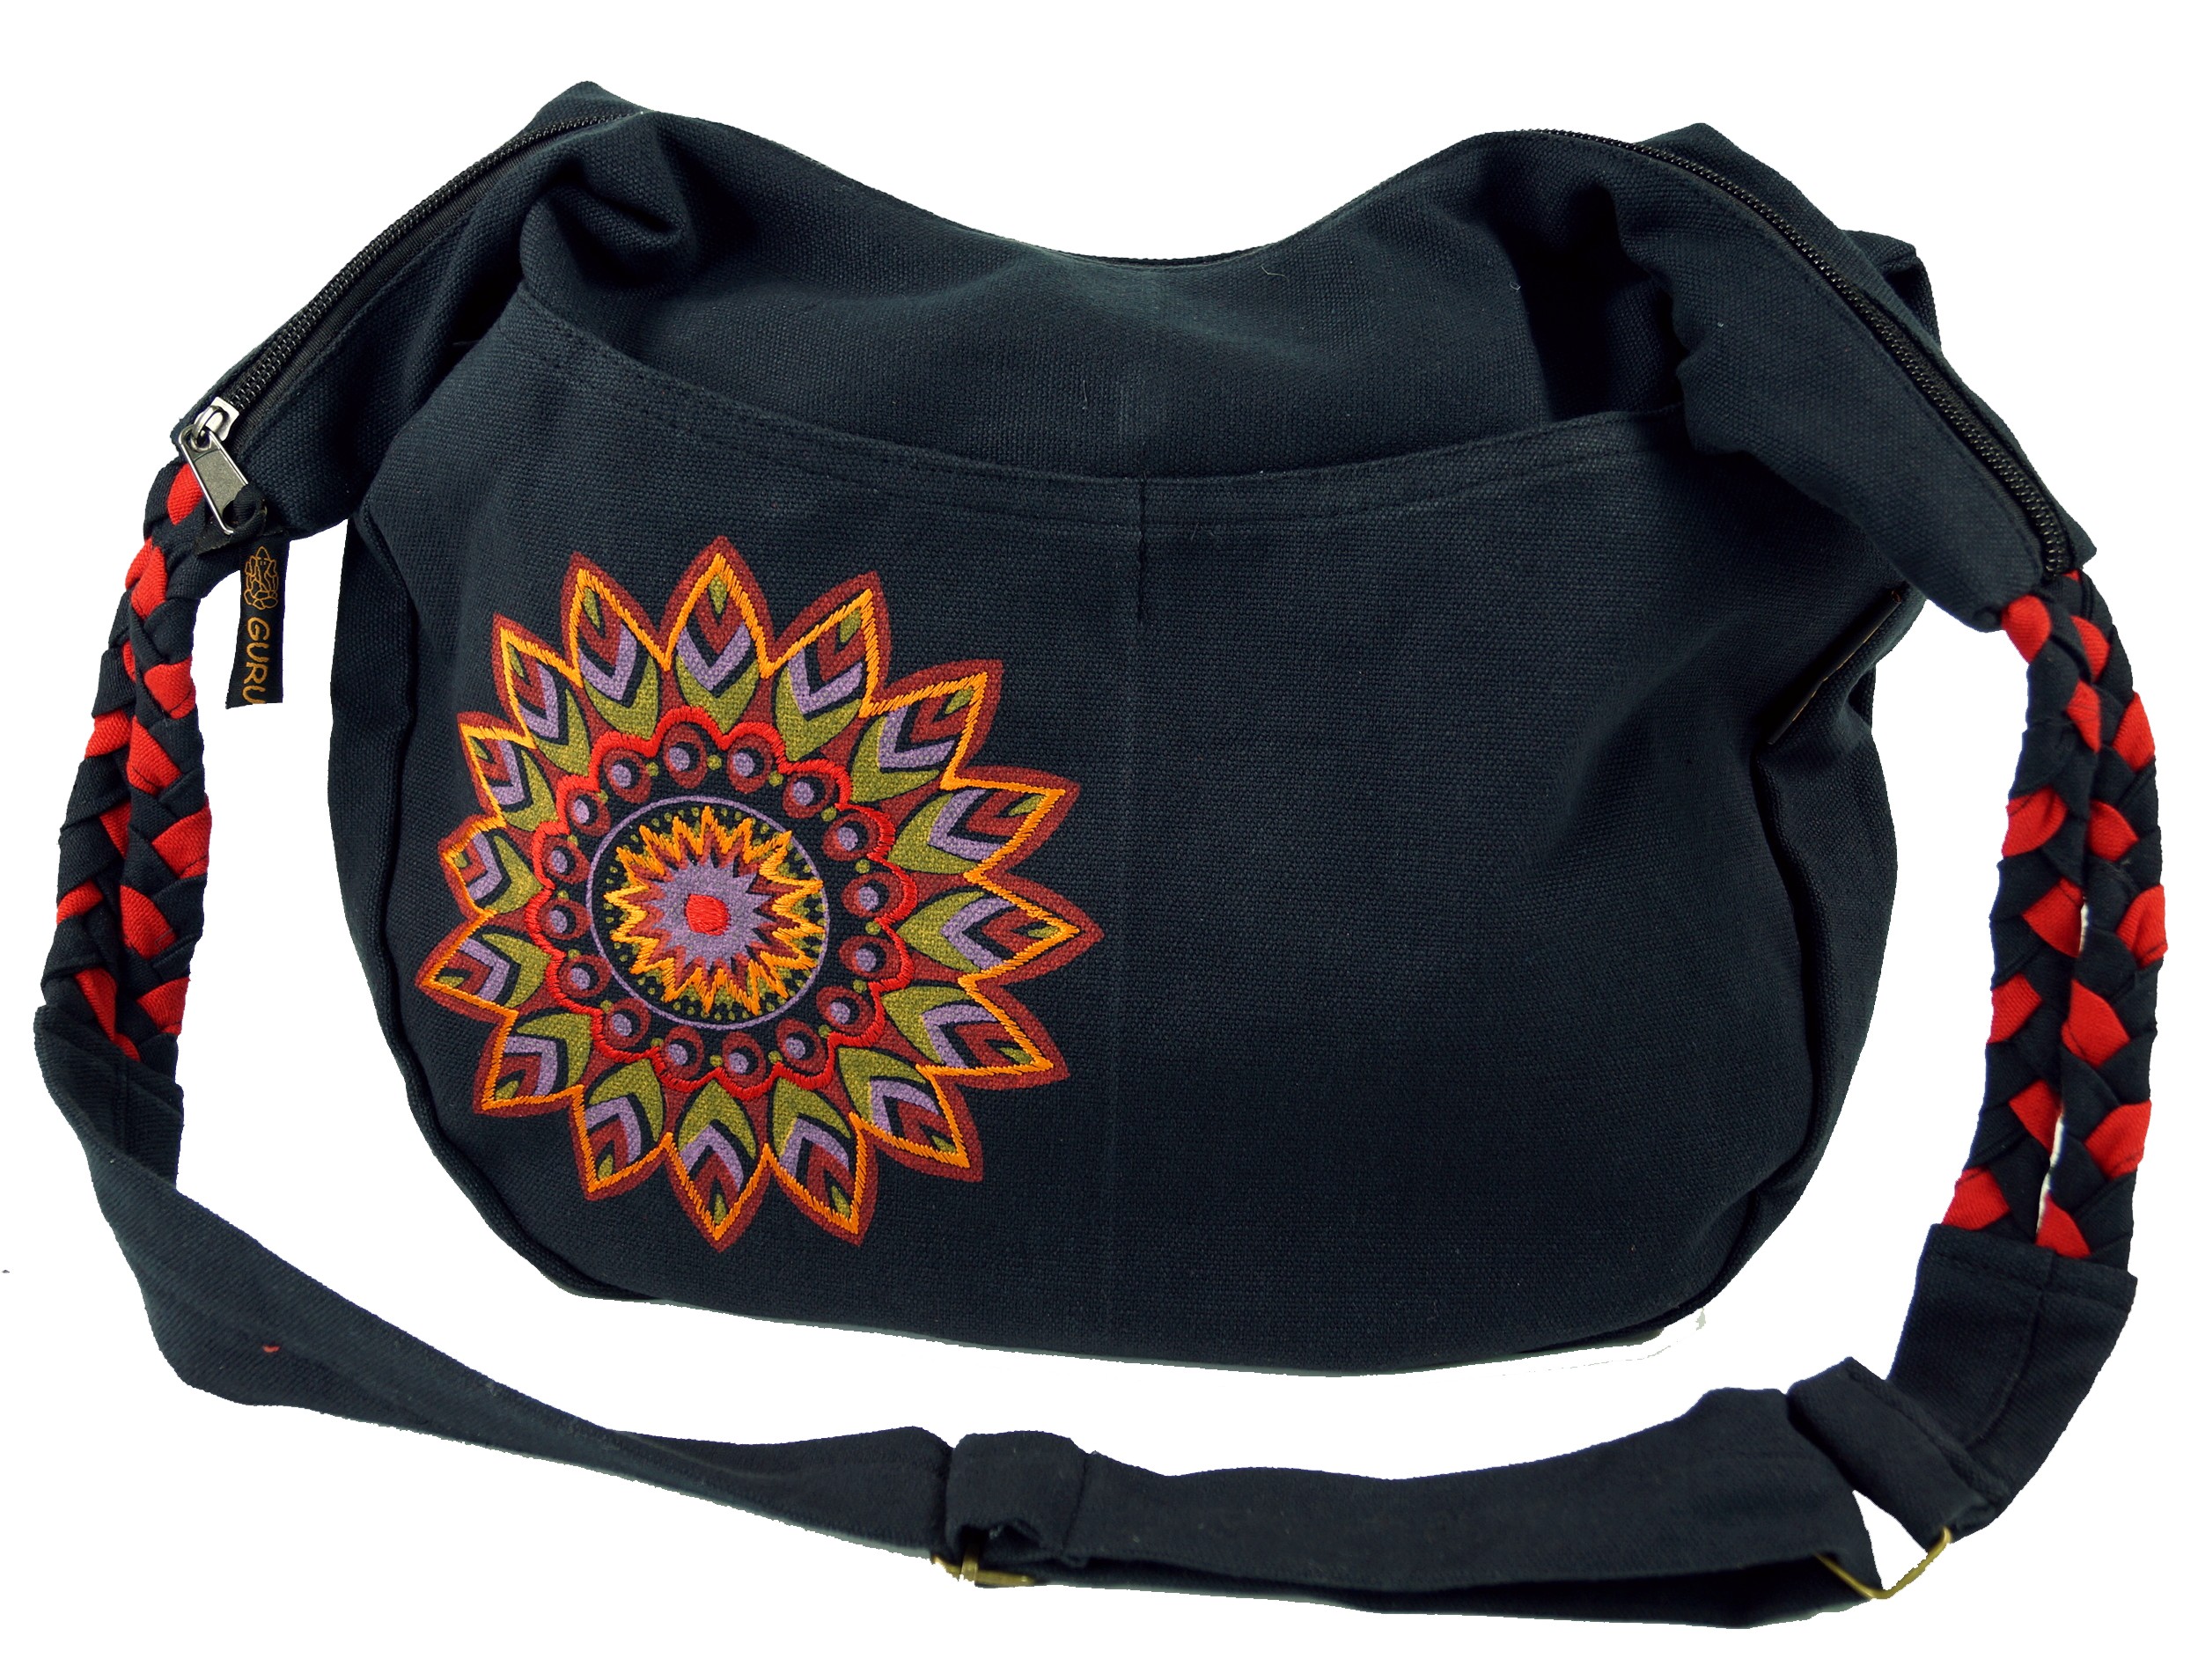 Kaufe jetzt die Ethno-Boho-Schultertasche Goa-Tasche Mandala bei Guru-Shop!